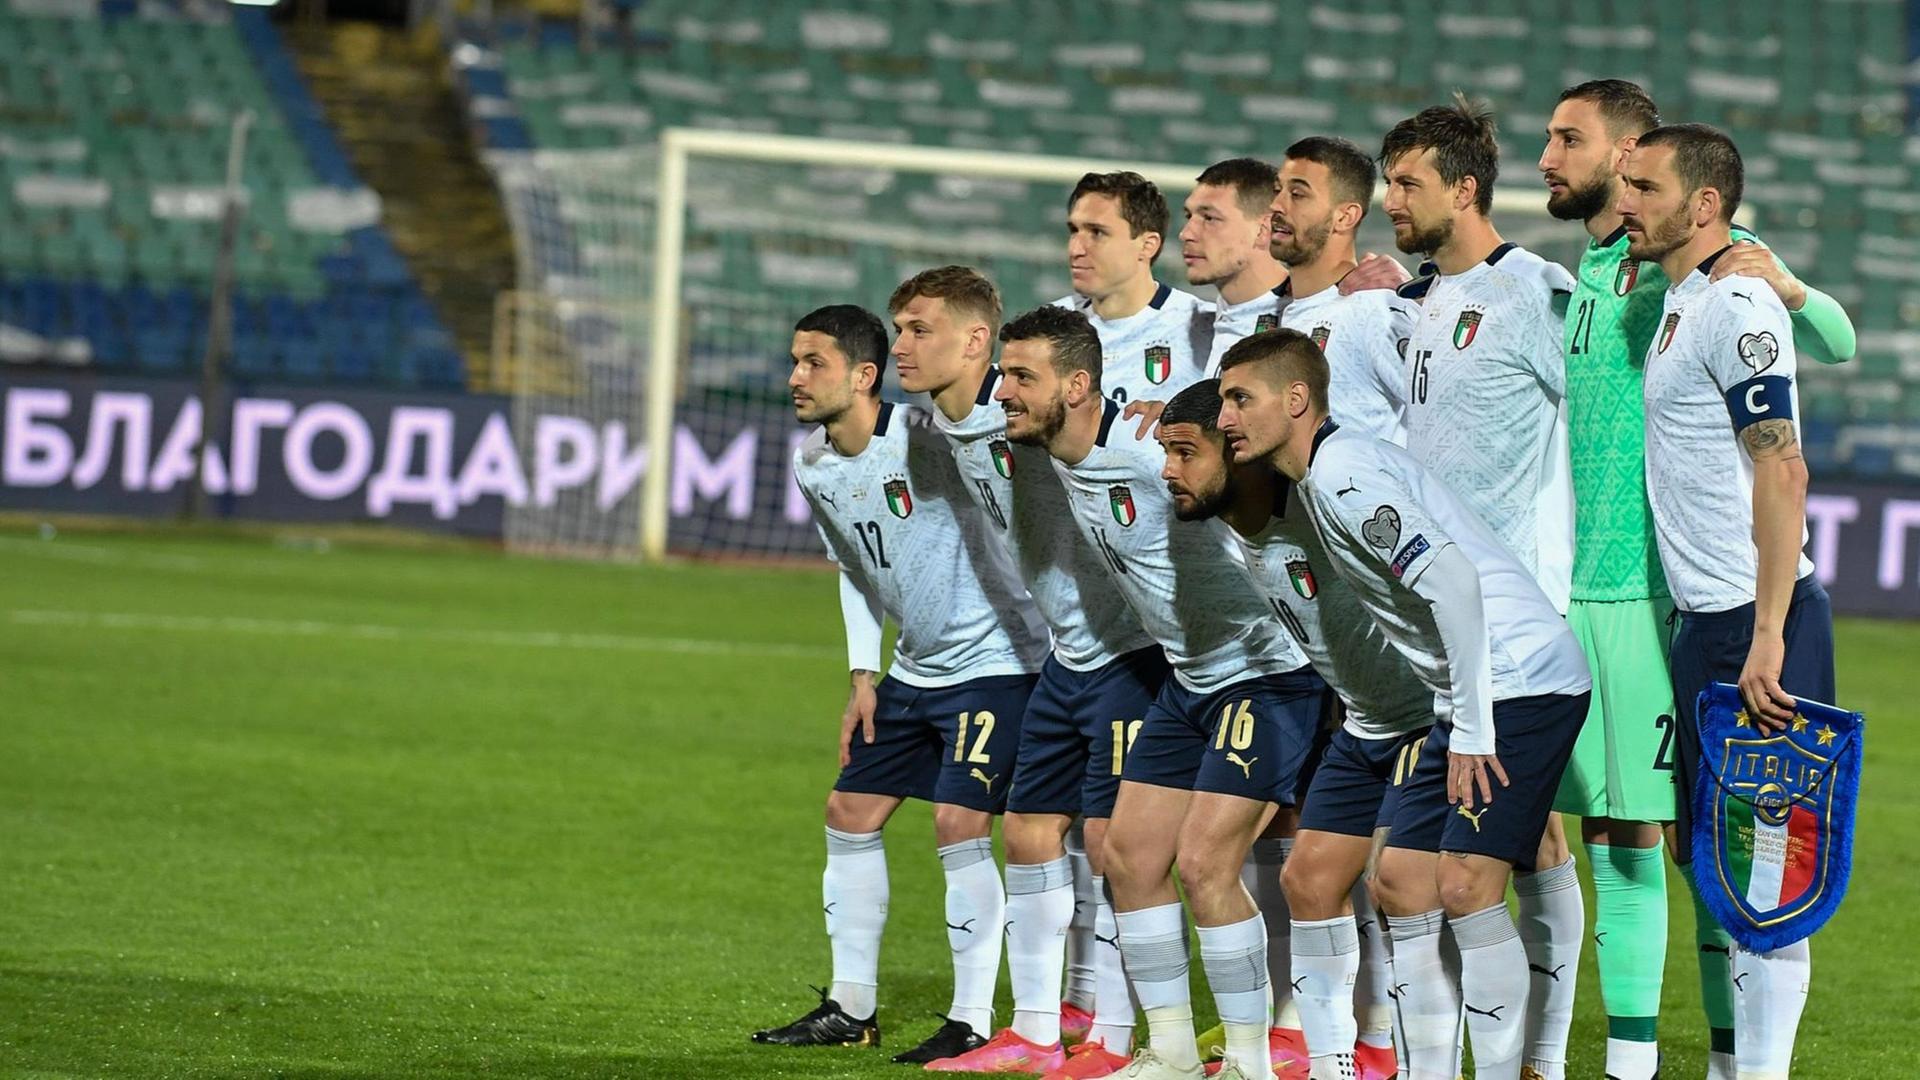 Football - national team, Nationalteam - BFU - World cup 2022 qualifications - Bulgaria vs Italy - 28.03.21 - Sofia Copyright: xVladimirxStoyanovx